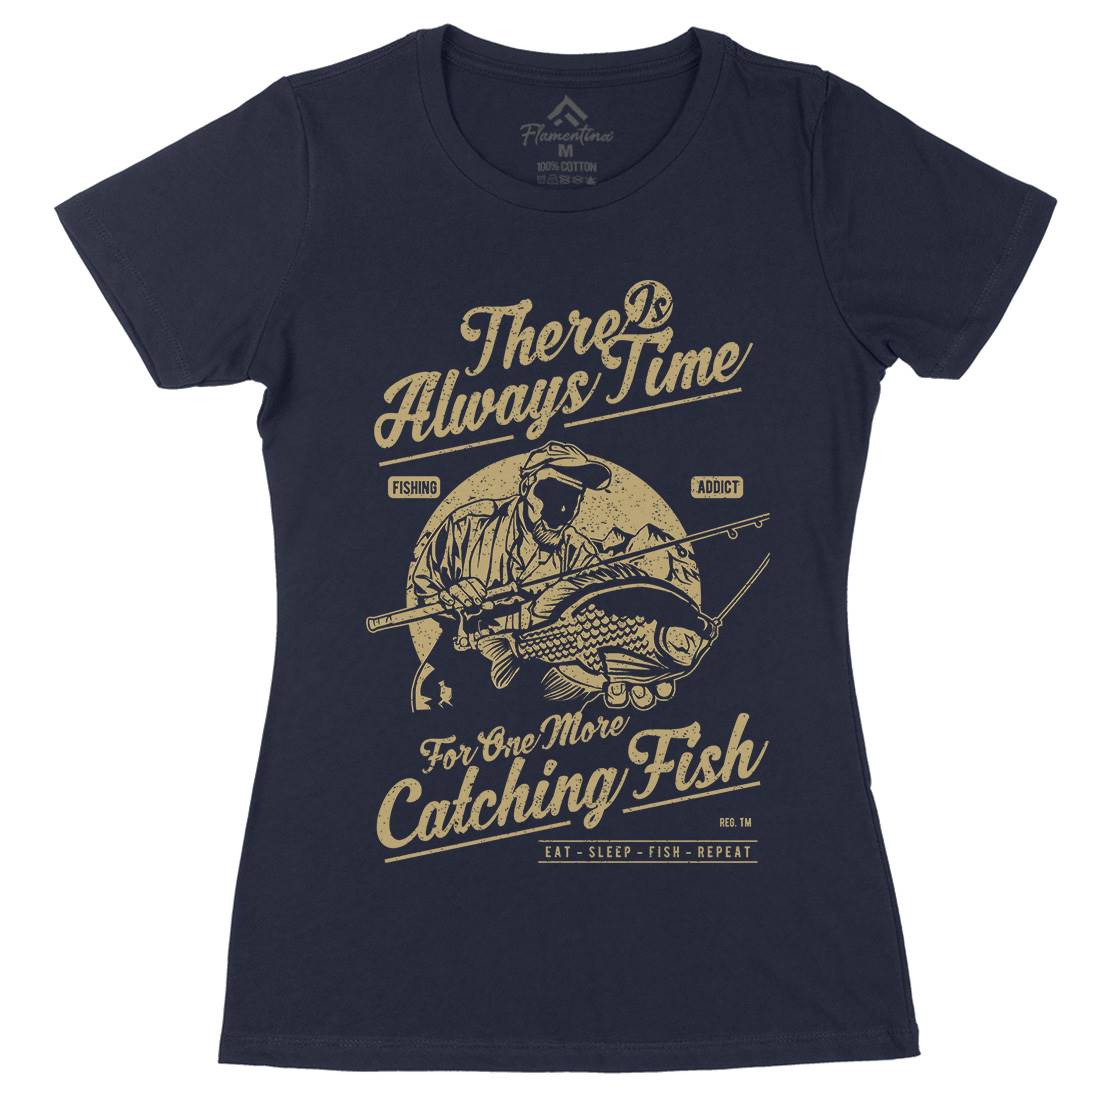 One More Catching Womens Organic Crew Neck T-Shirt Fishing A731